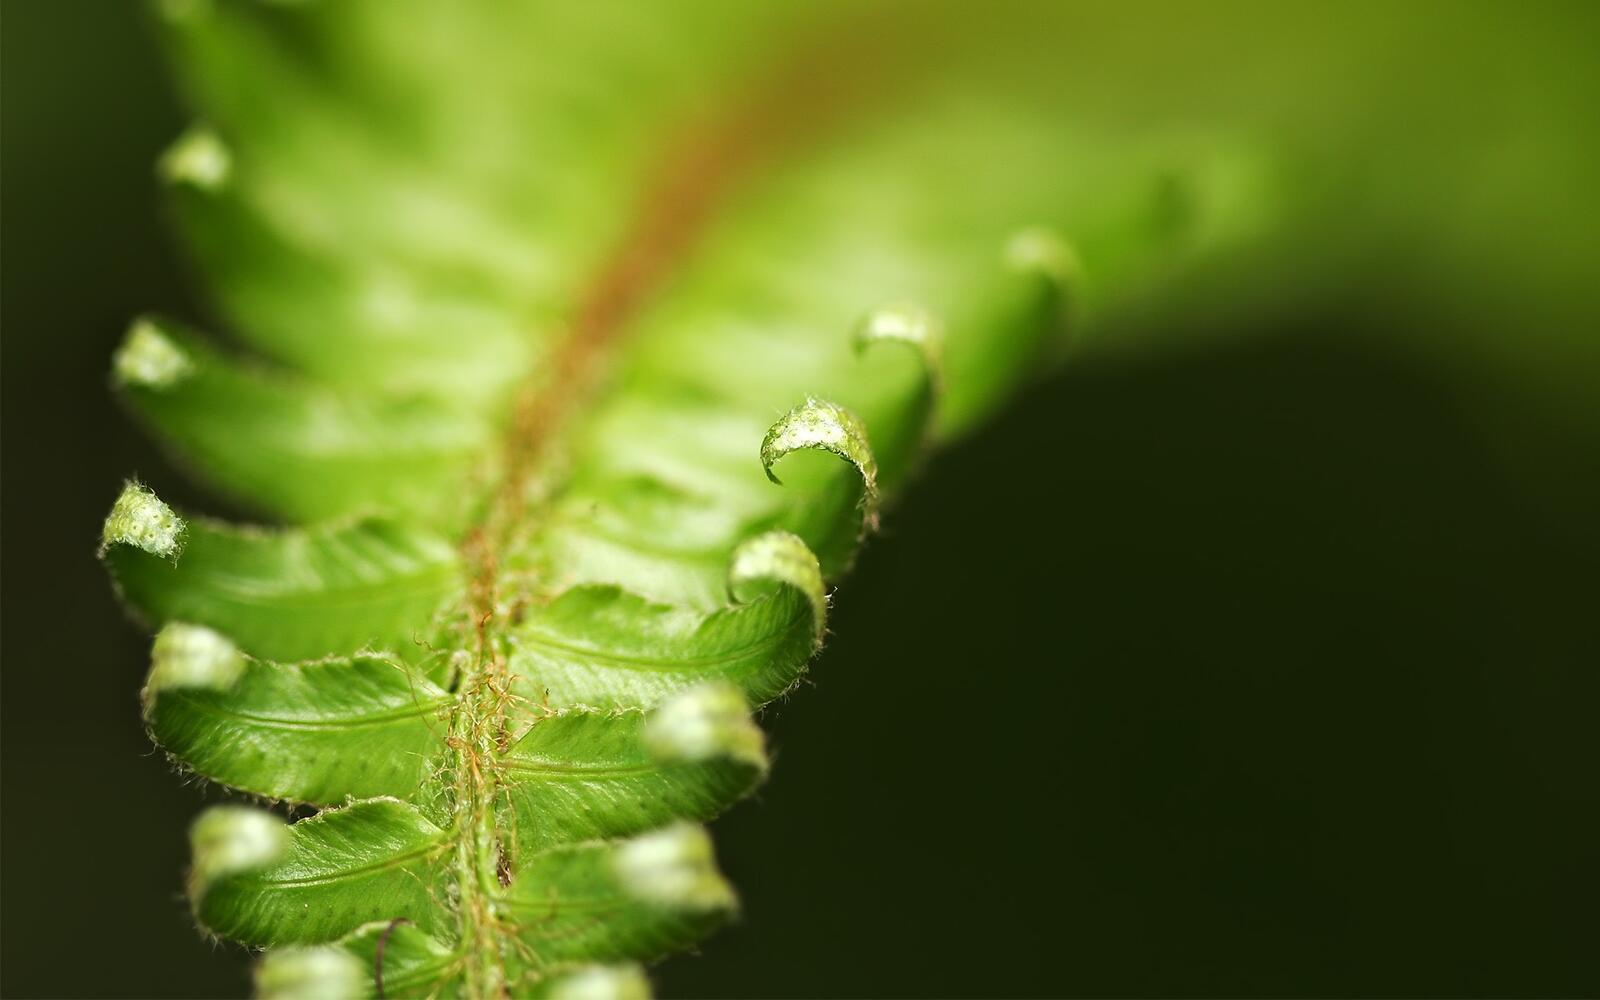 Wallpapers plant stem leaf macro photography on the desktop